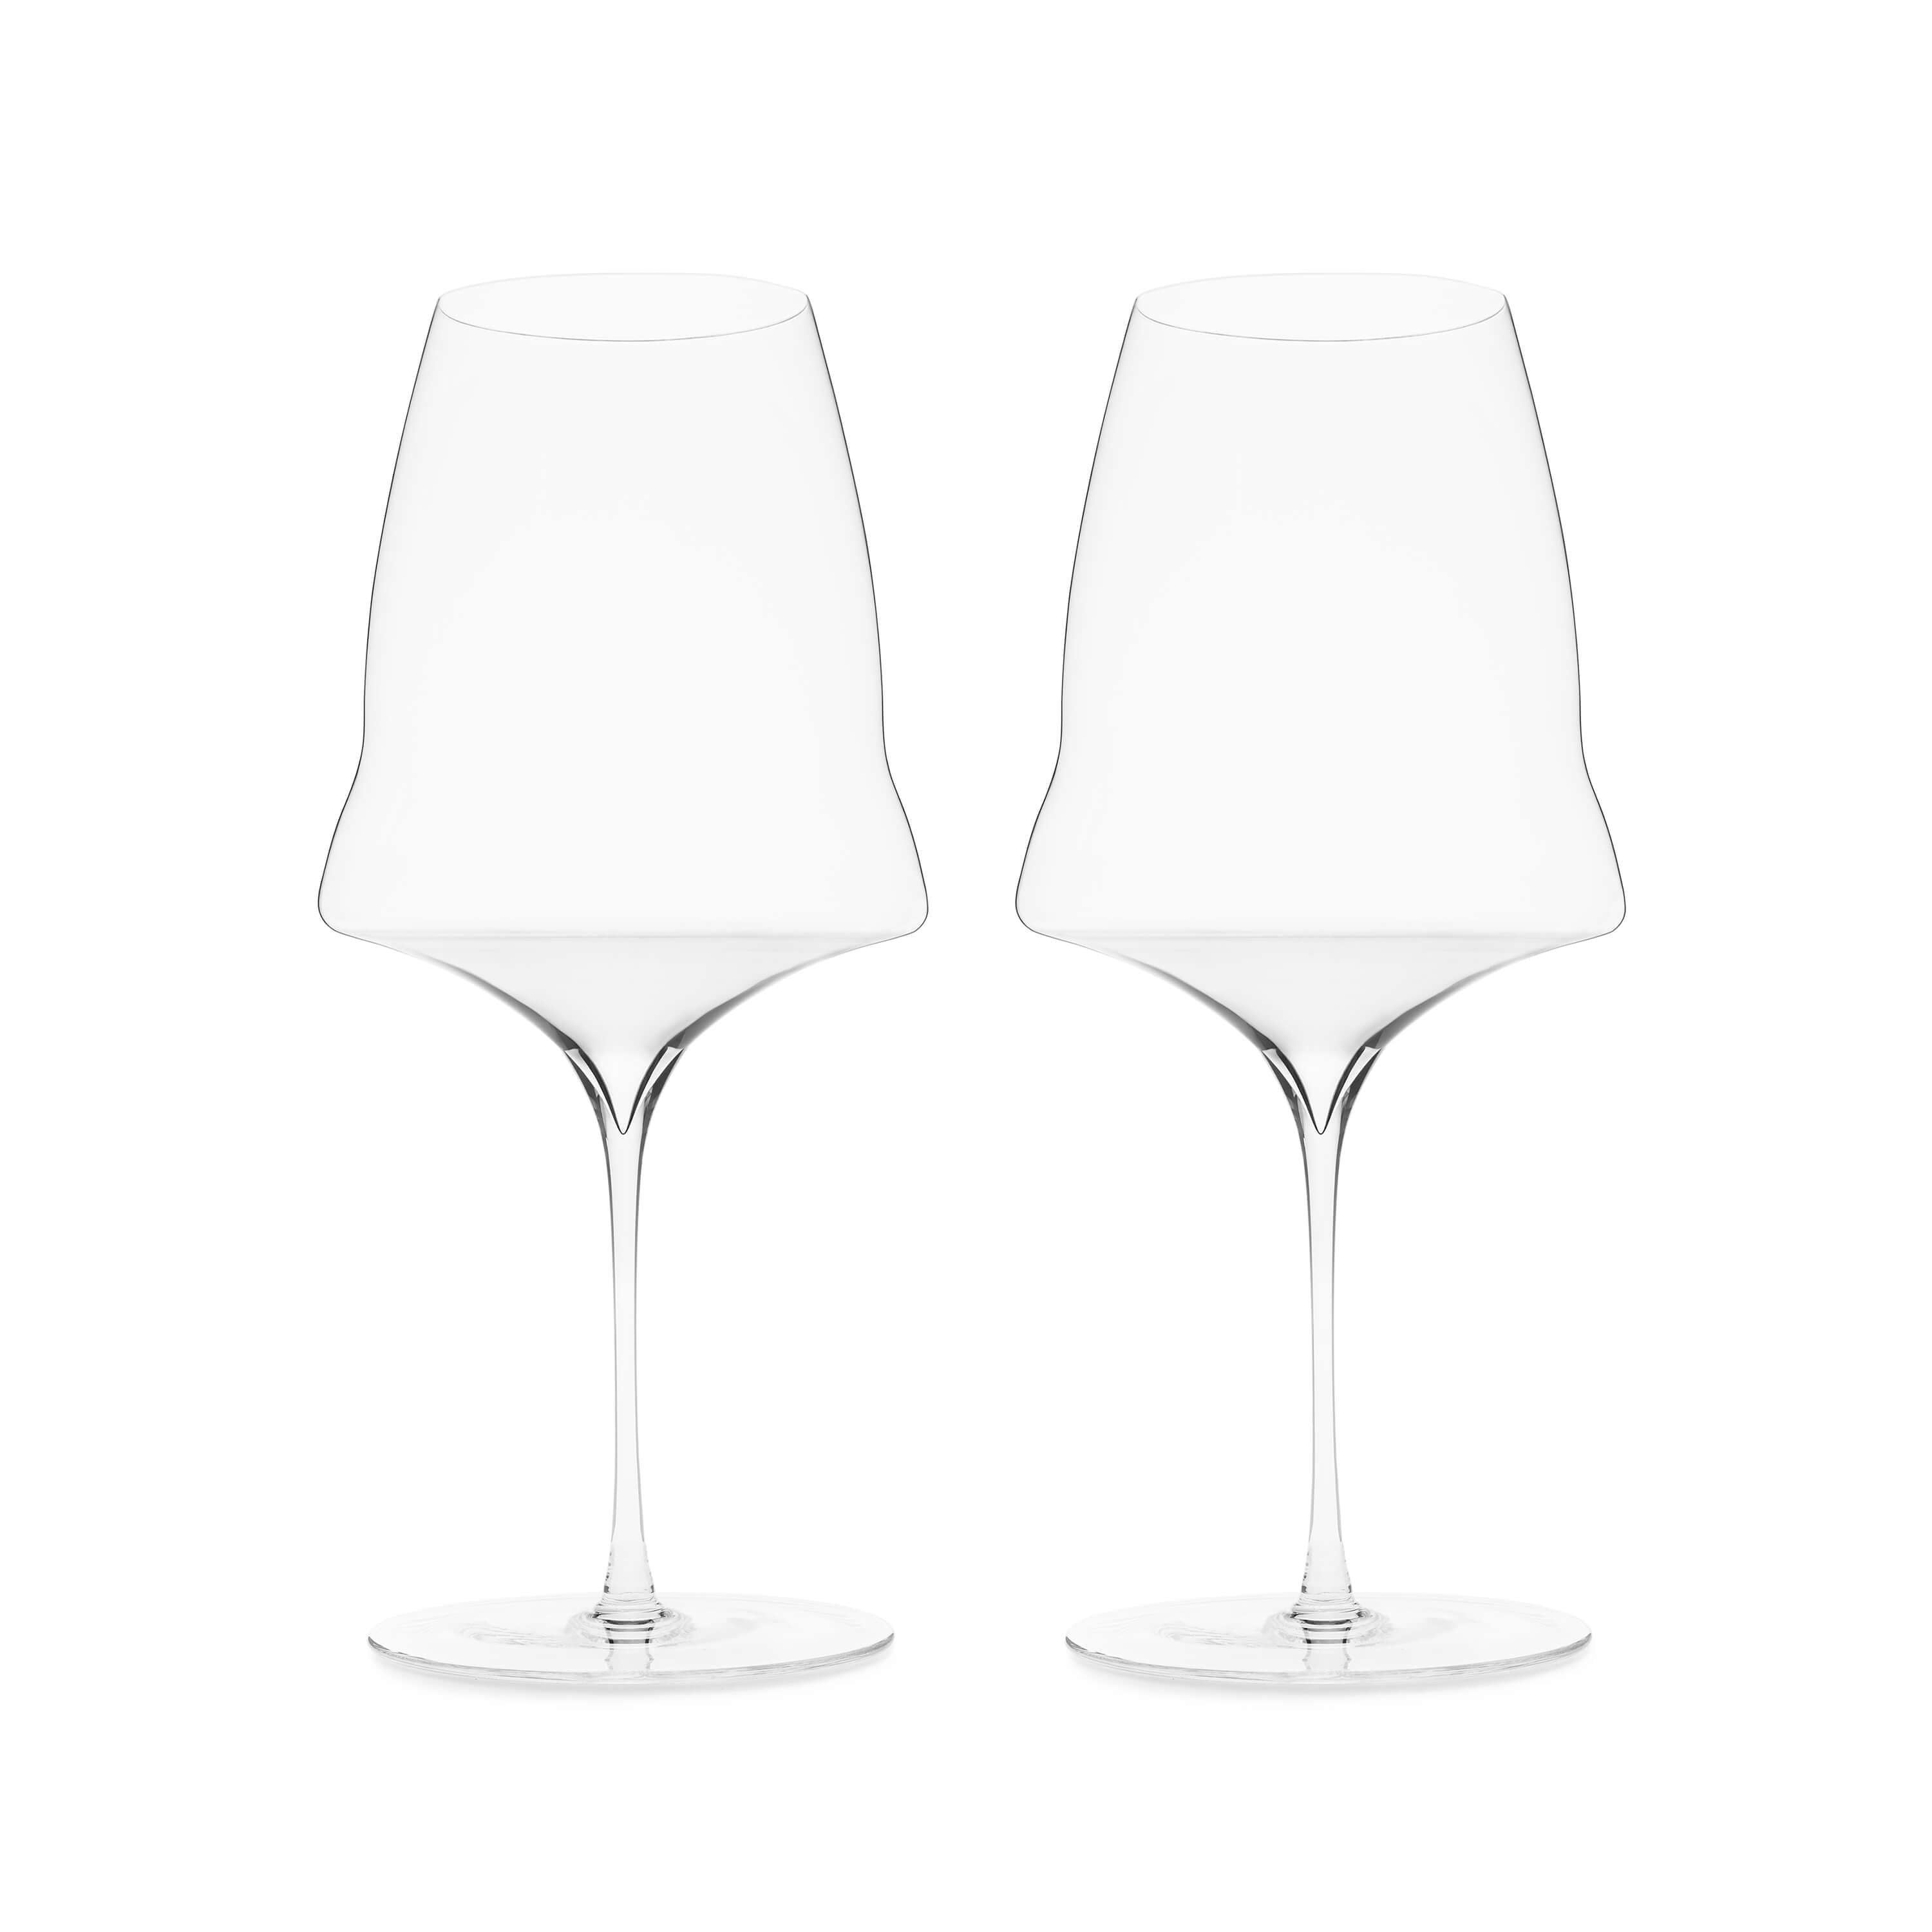 JOSEPHINE No 3 by Josephinenhütte – Red wine glasses #Set of 2 glasses_JOSEPHINE No 3 – Red